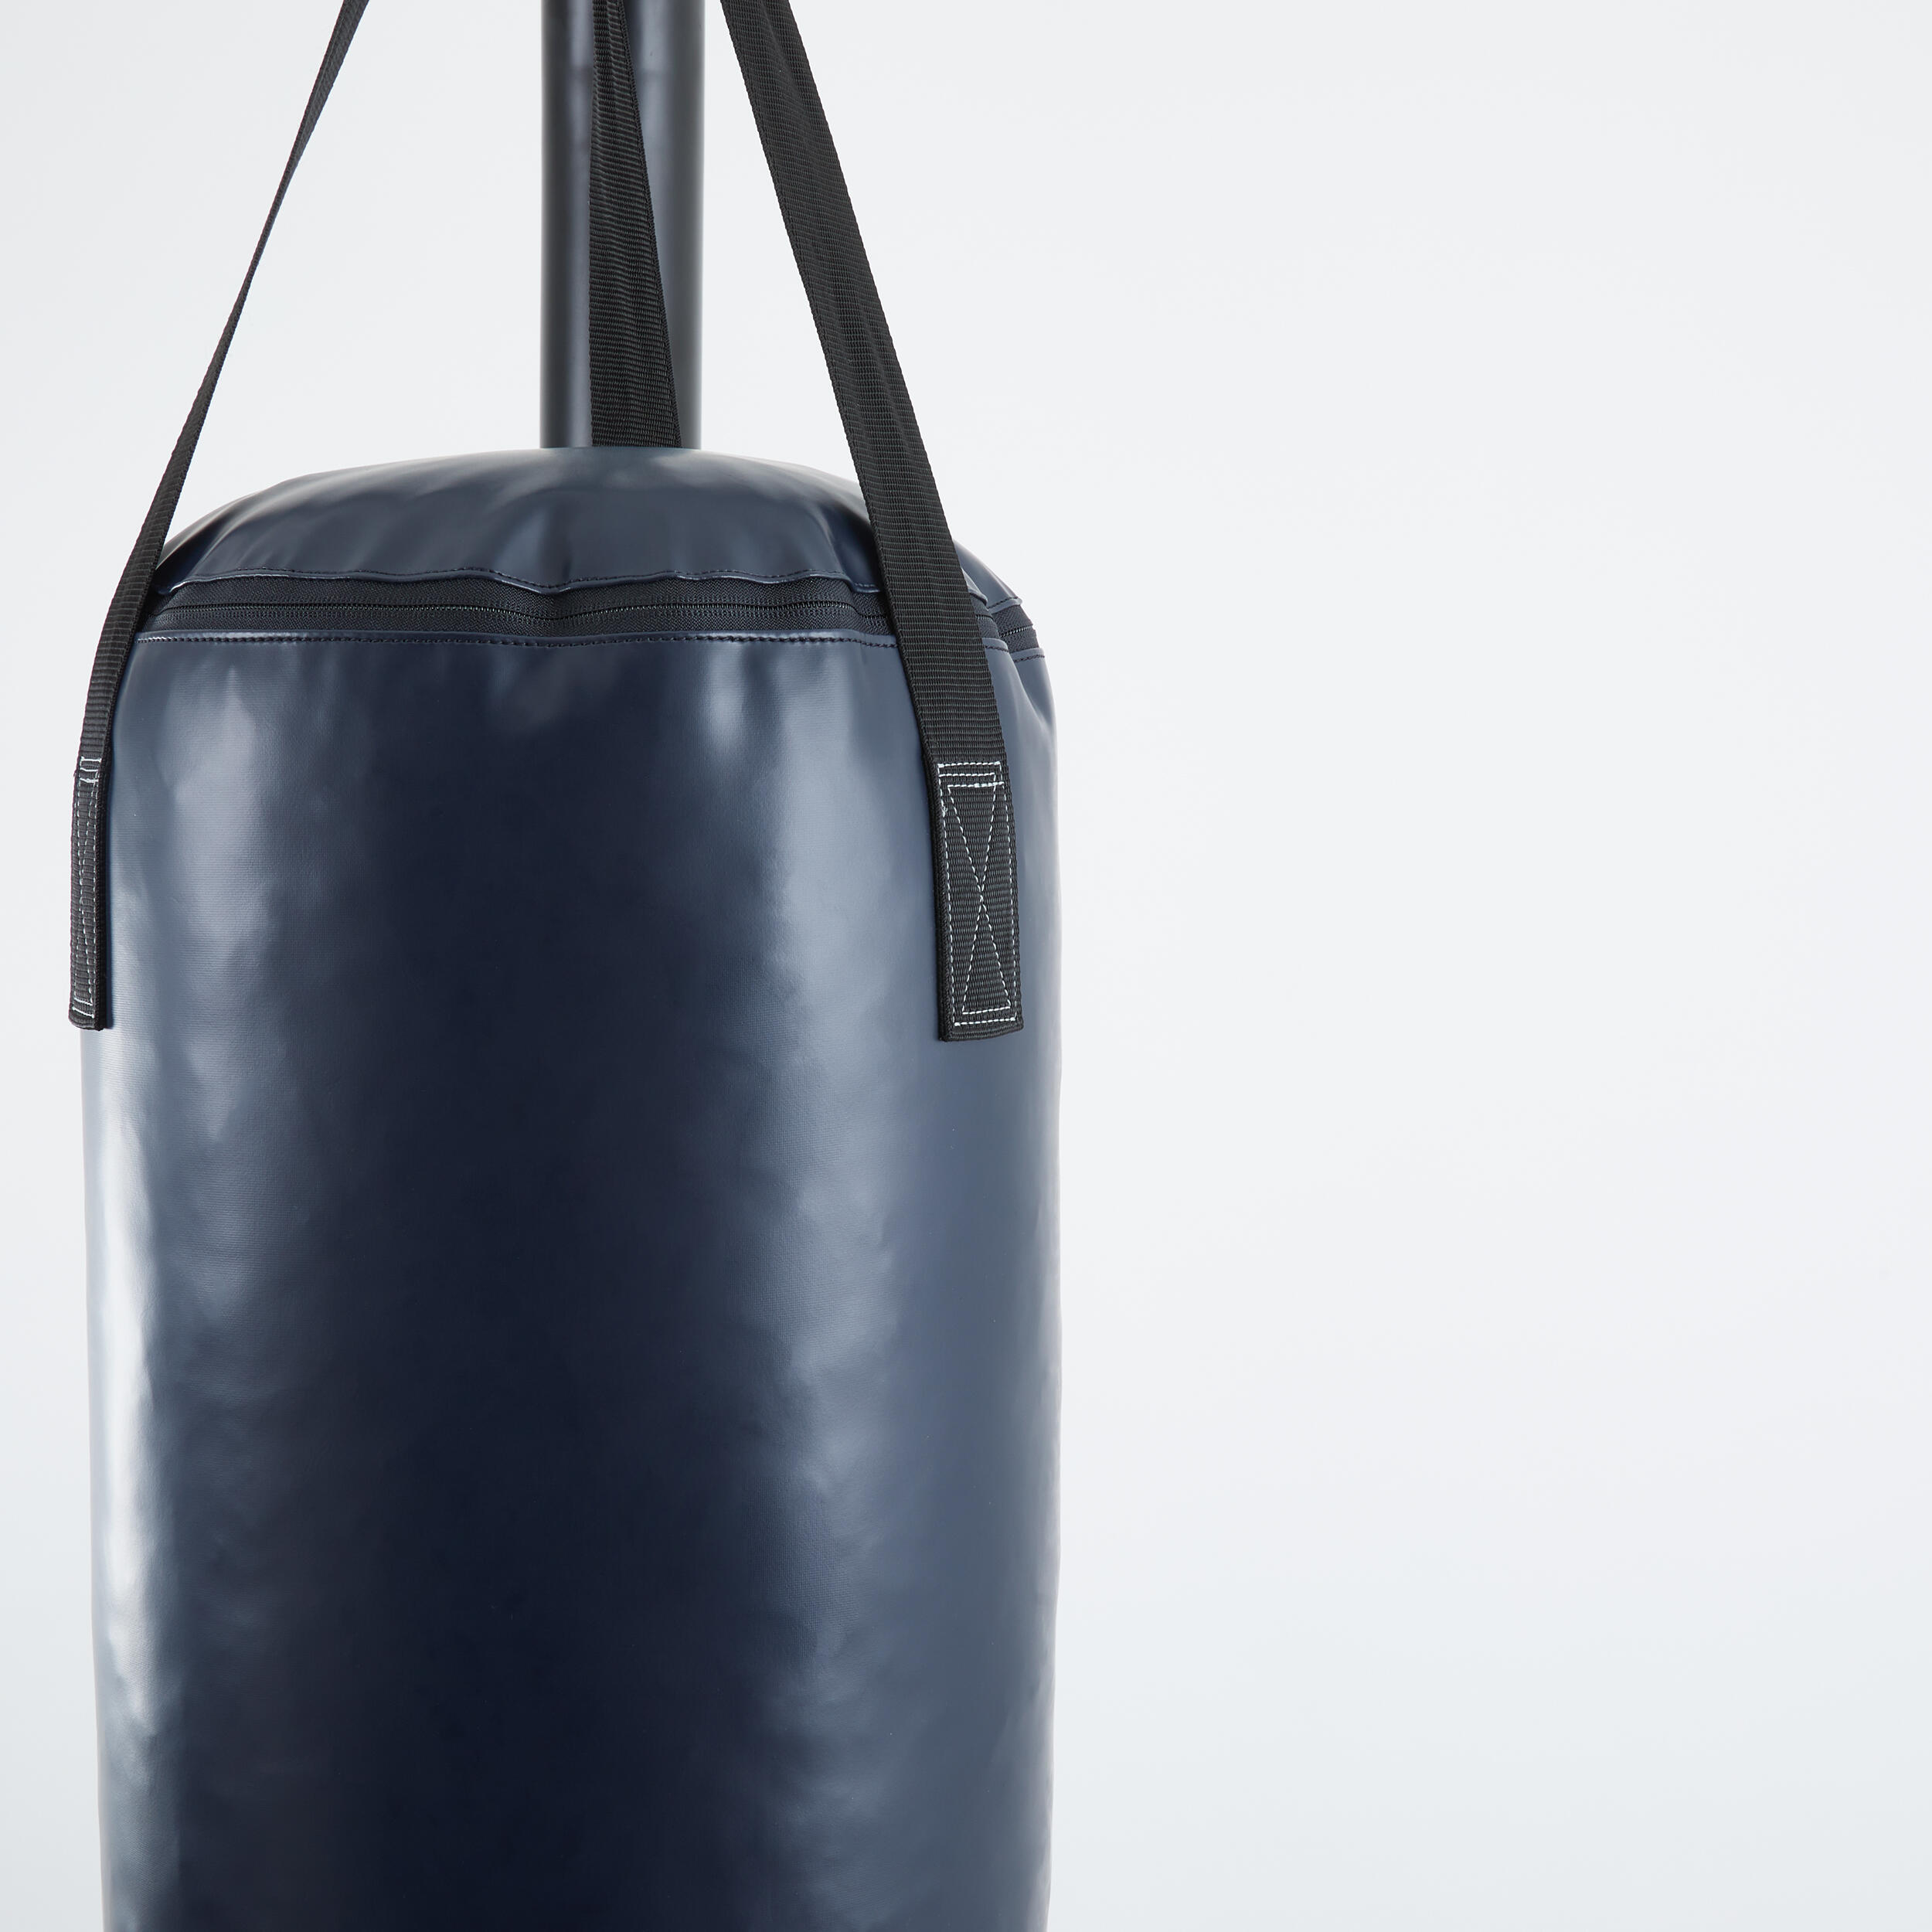 20 kg Punching/Kicking Bag with Straps - 120 - OUTSHOCK